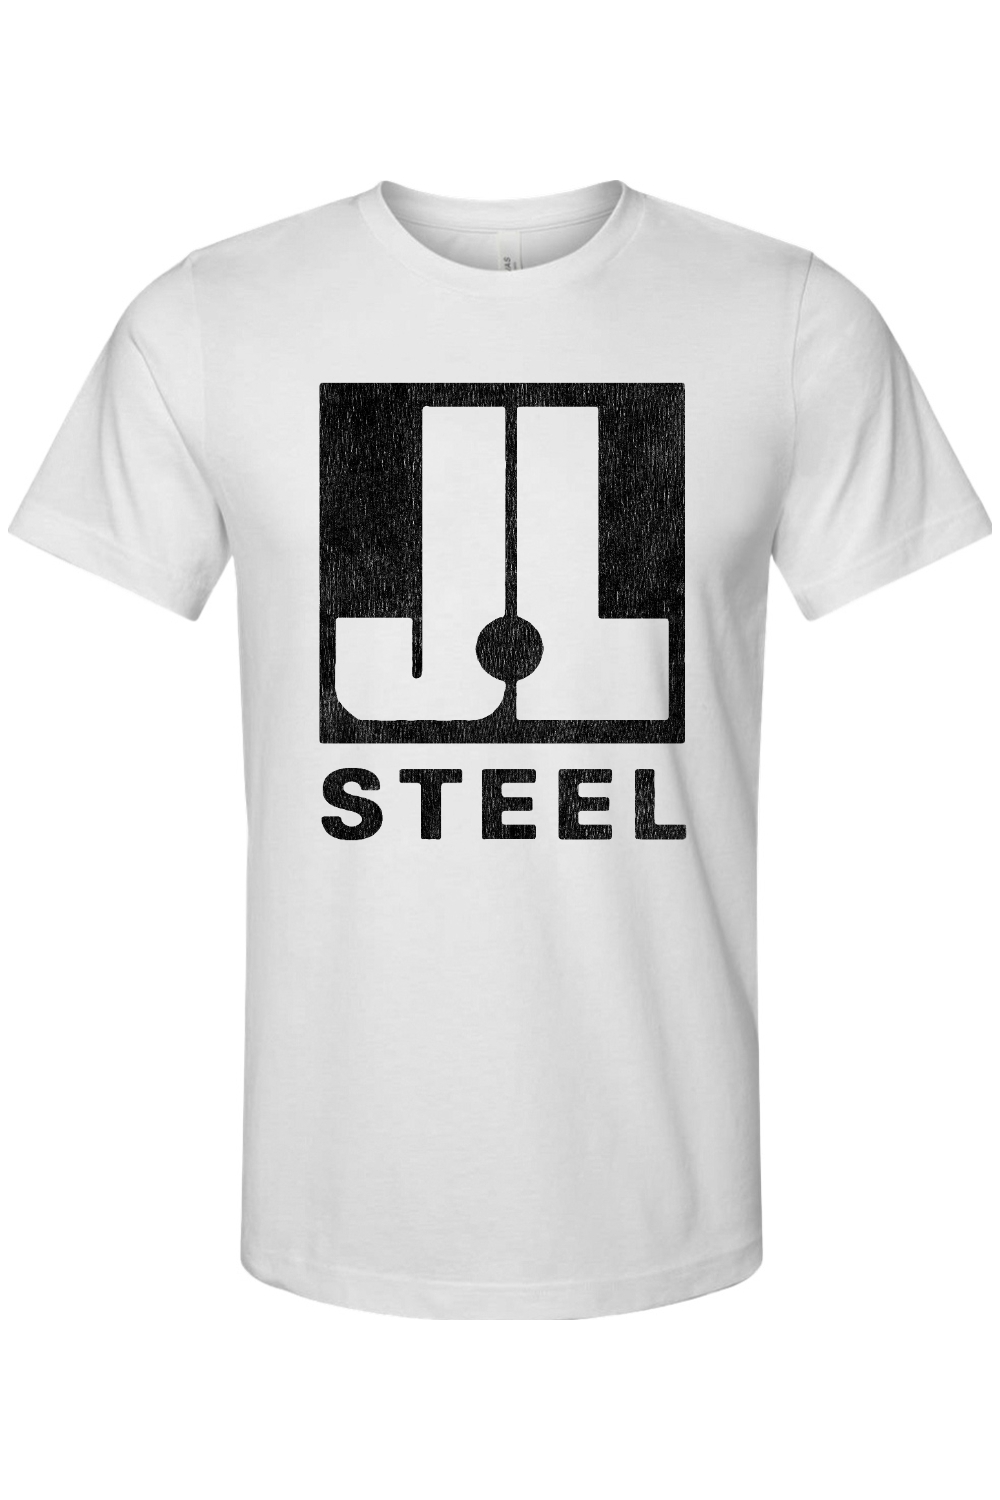 J&L Steel - Black - Bella + Canvas Jersey Tee - Yinzylvania